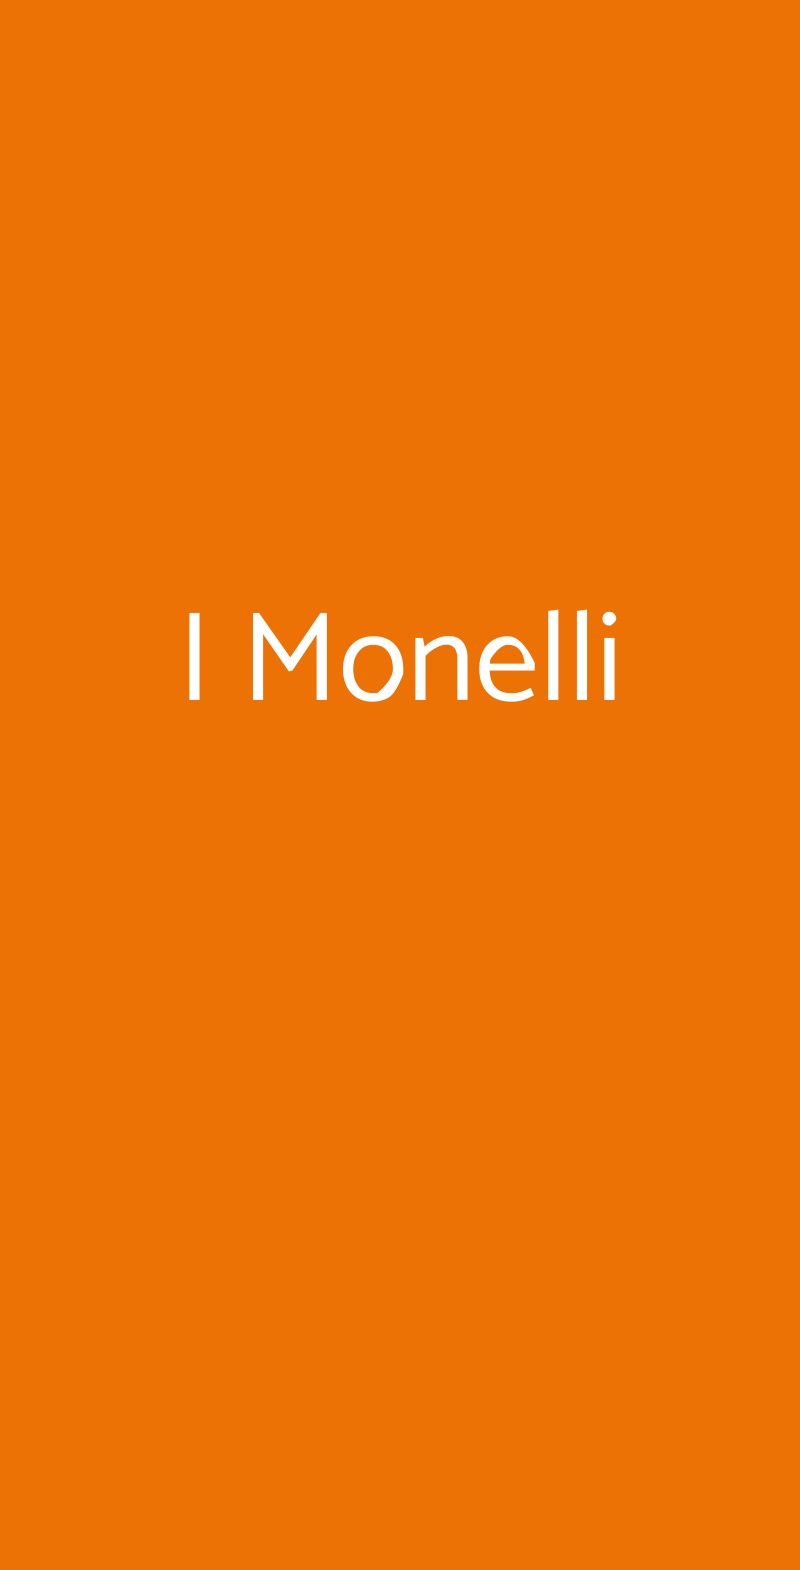 I Monelli Monza menù 1 pagina